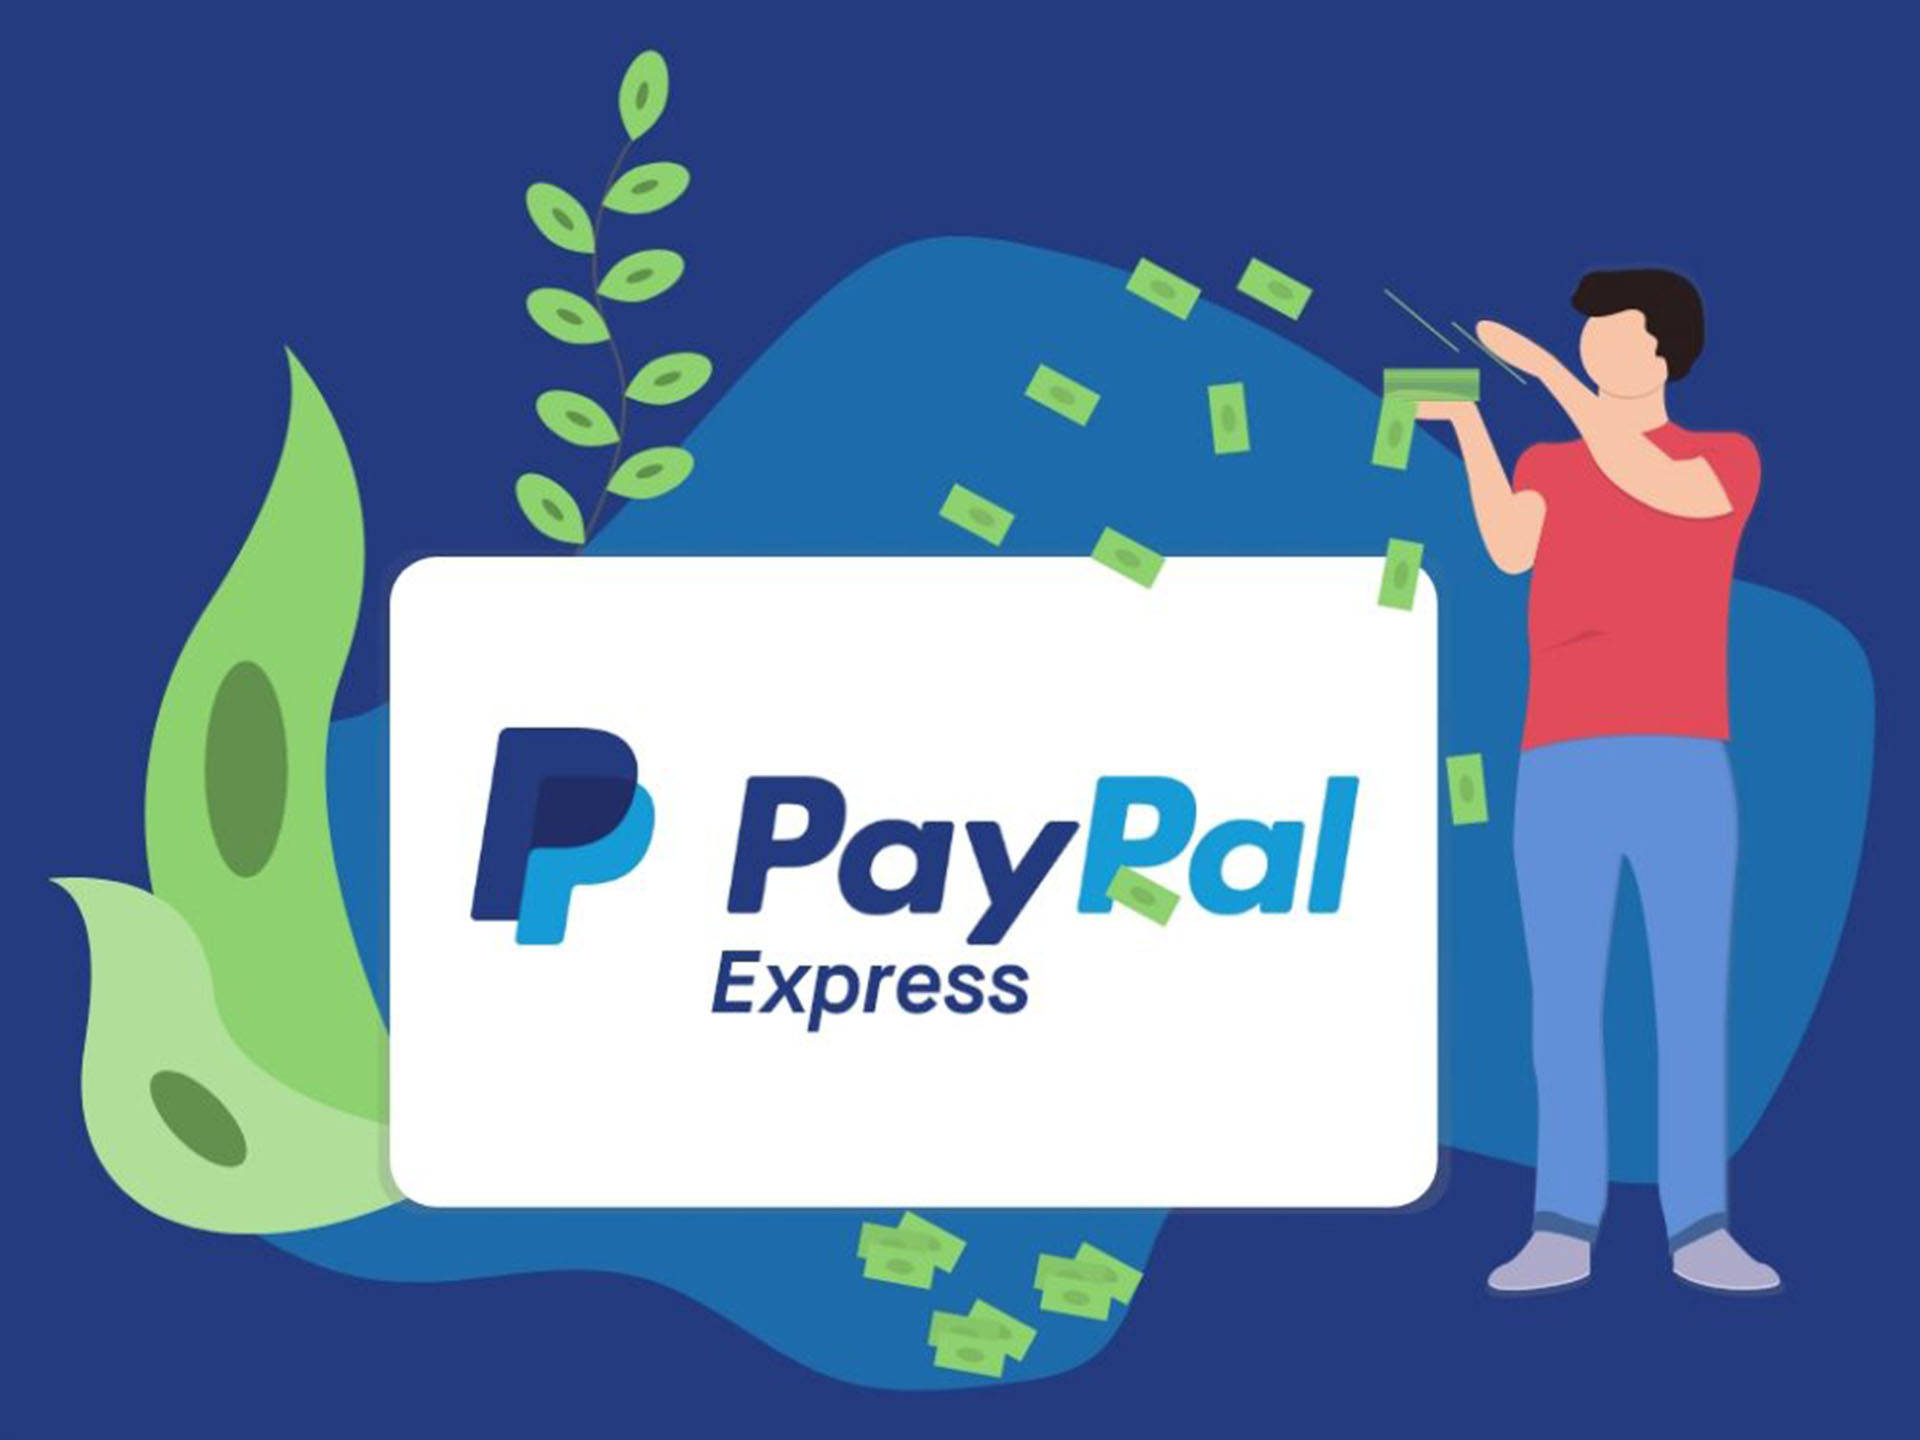 Paypal Express Illustration